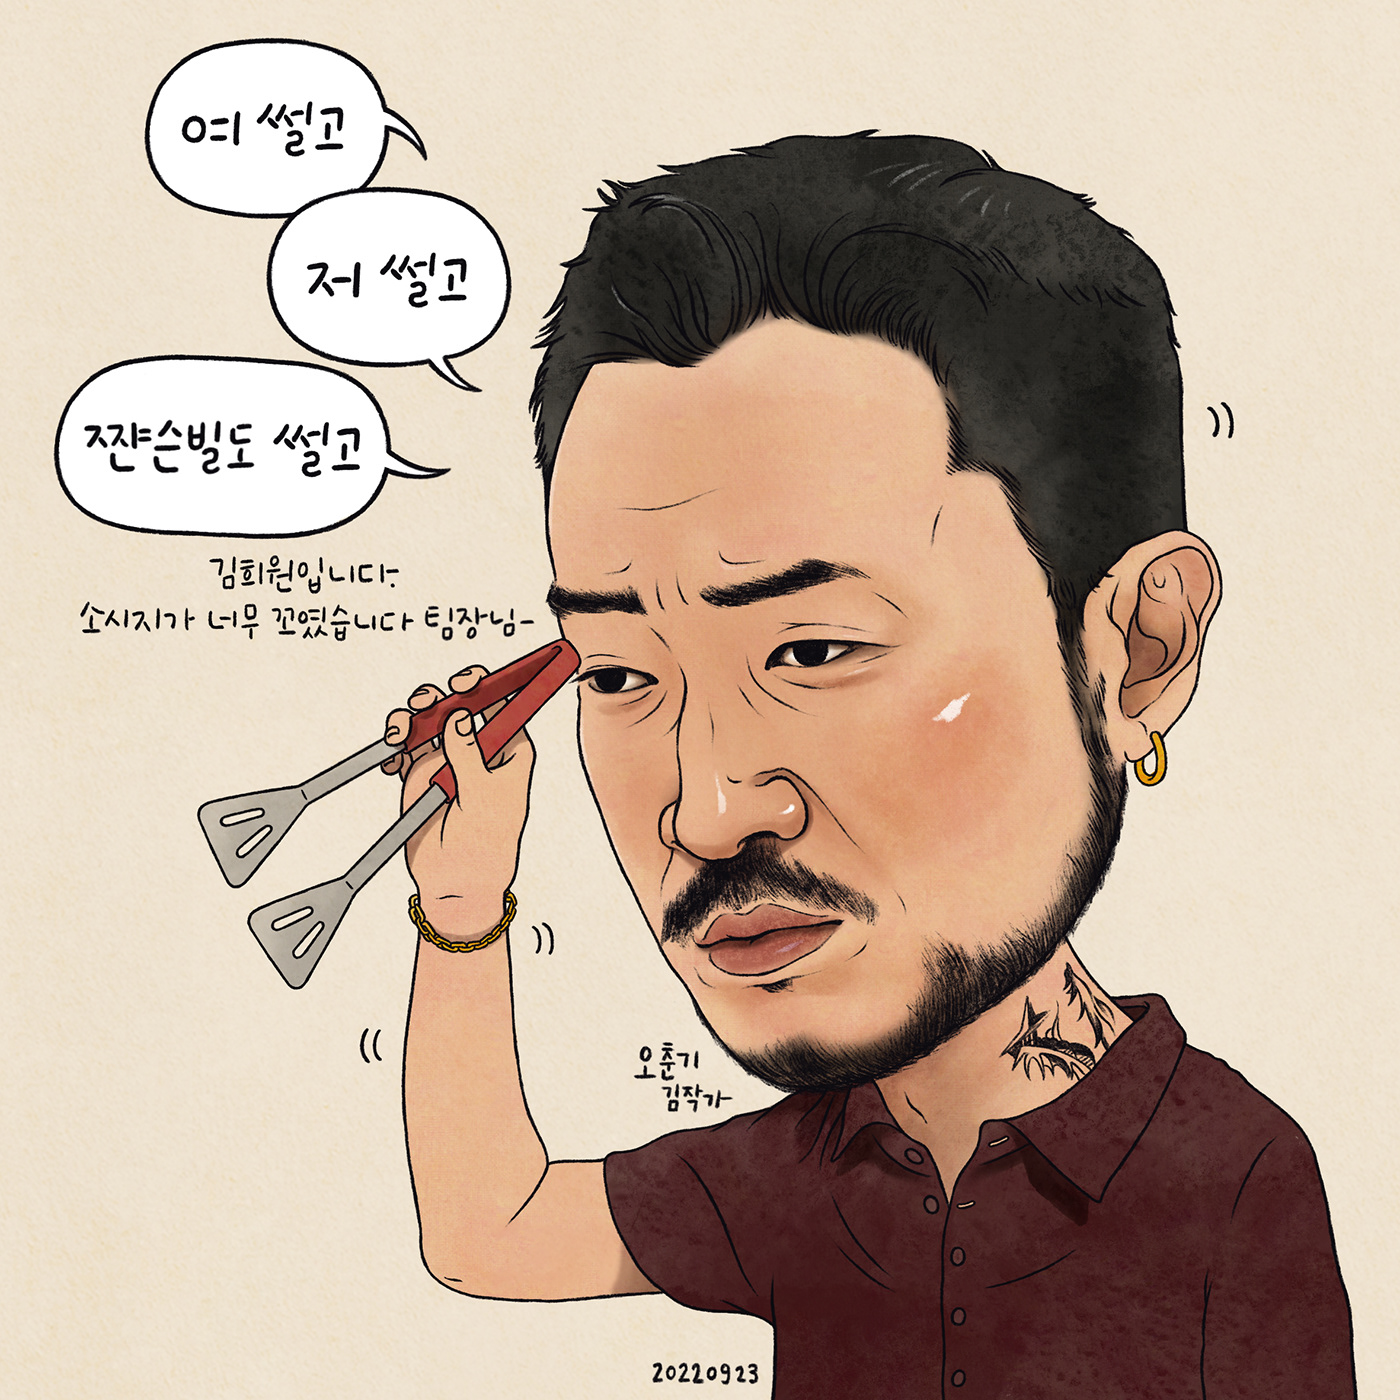 actor artwork caricature   caricatures fanart human face k-drama moviestar portrait Portraiture